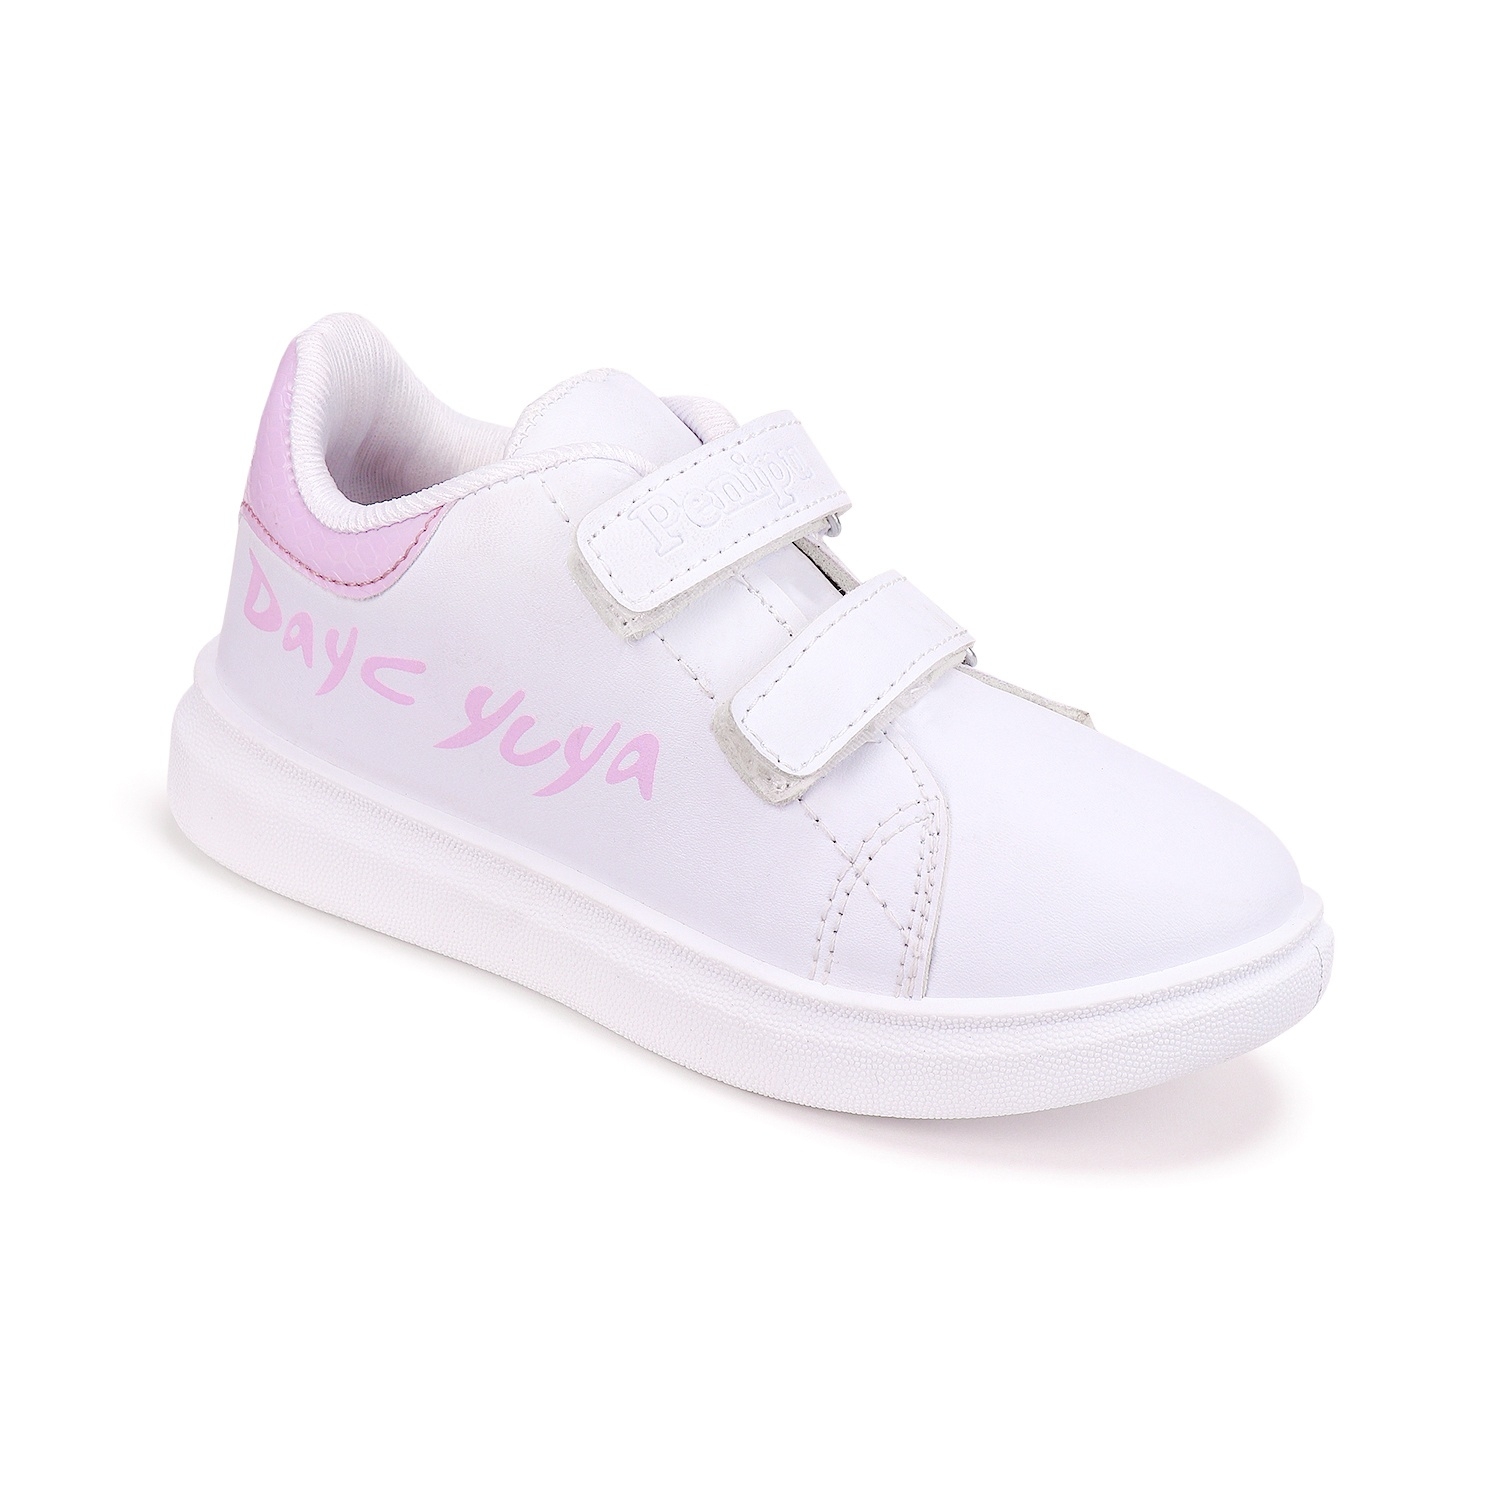 Camro Zara 1 White/Purple Boys Sneakers